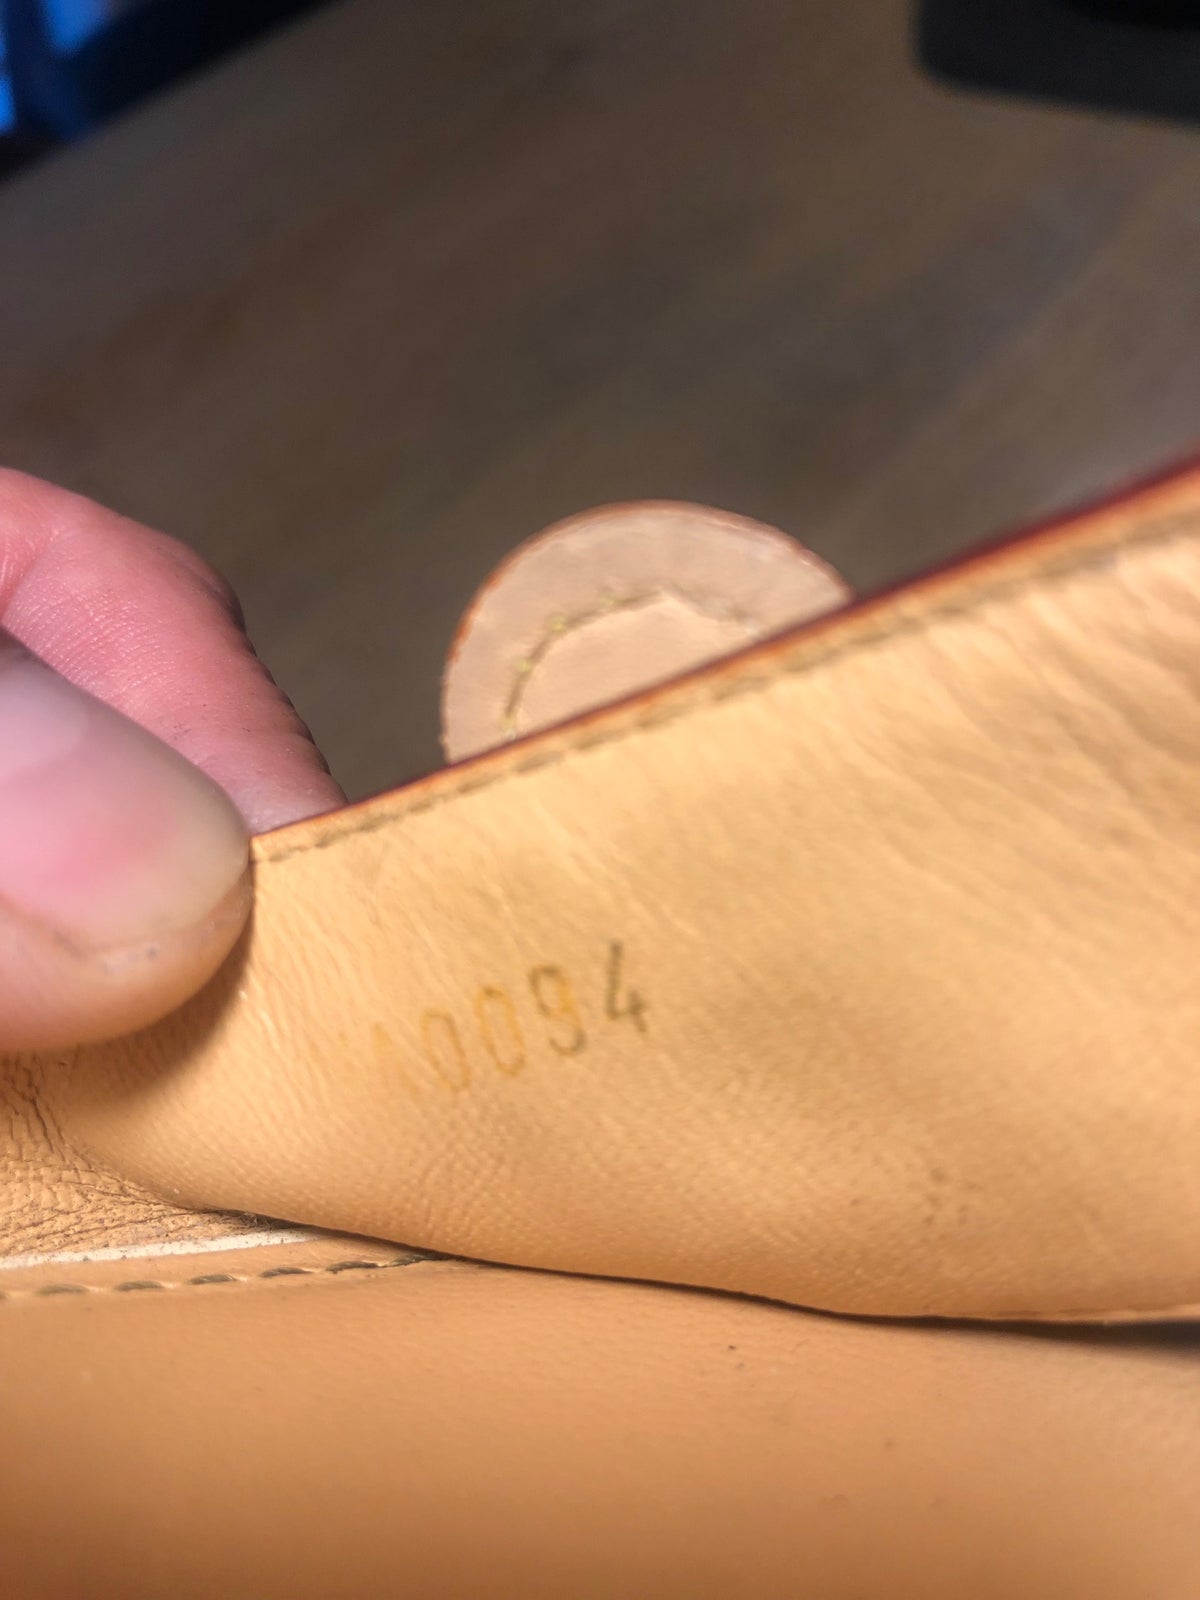 Leather sandals Louis Vuitton Multicolour size 40 EU in Leather - 32852280